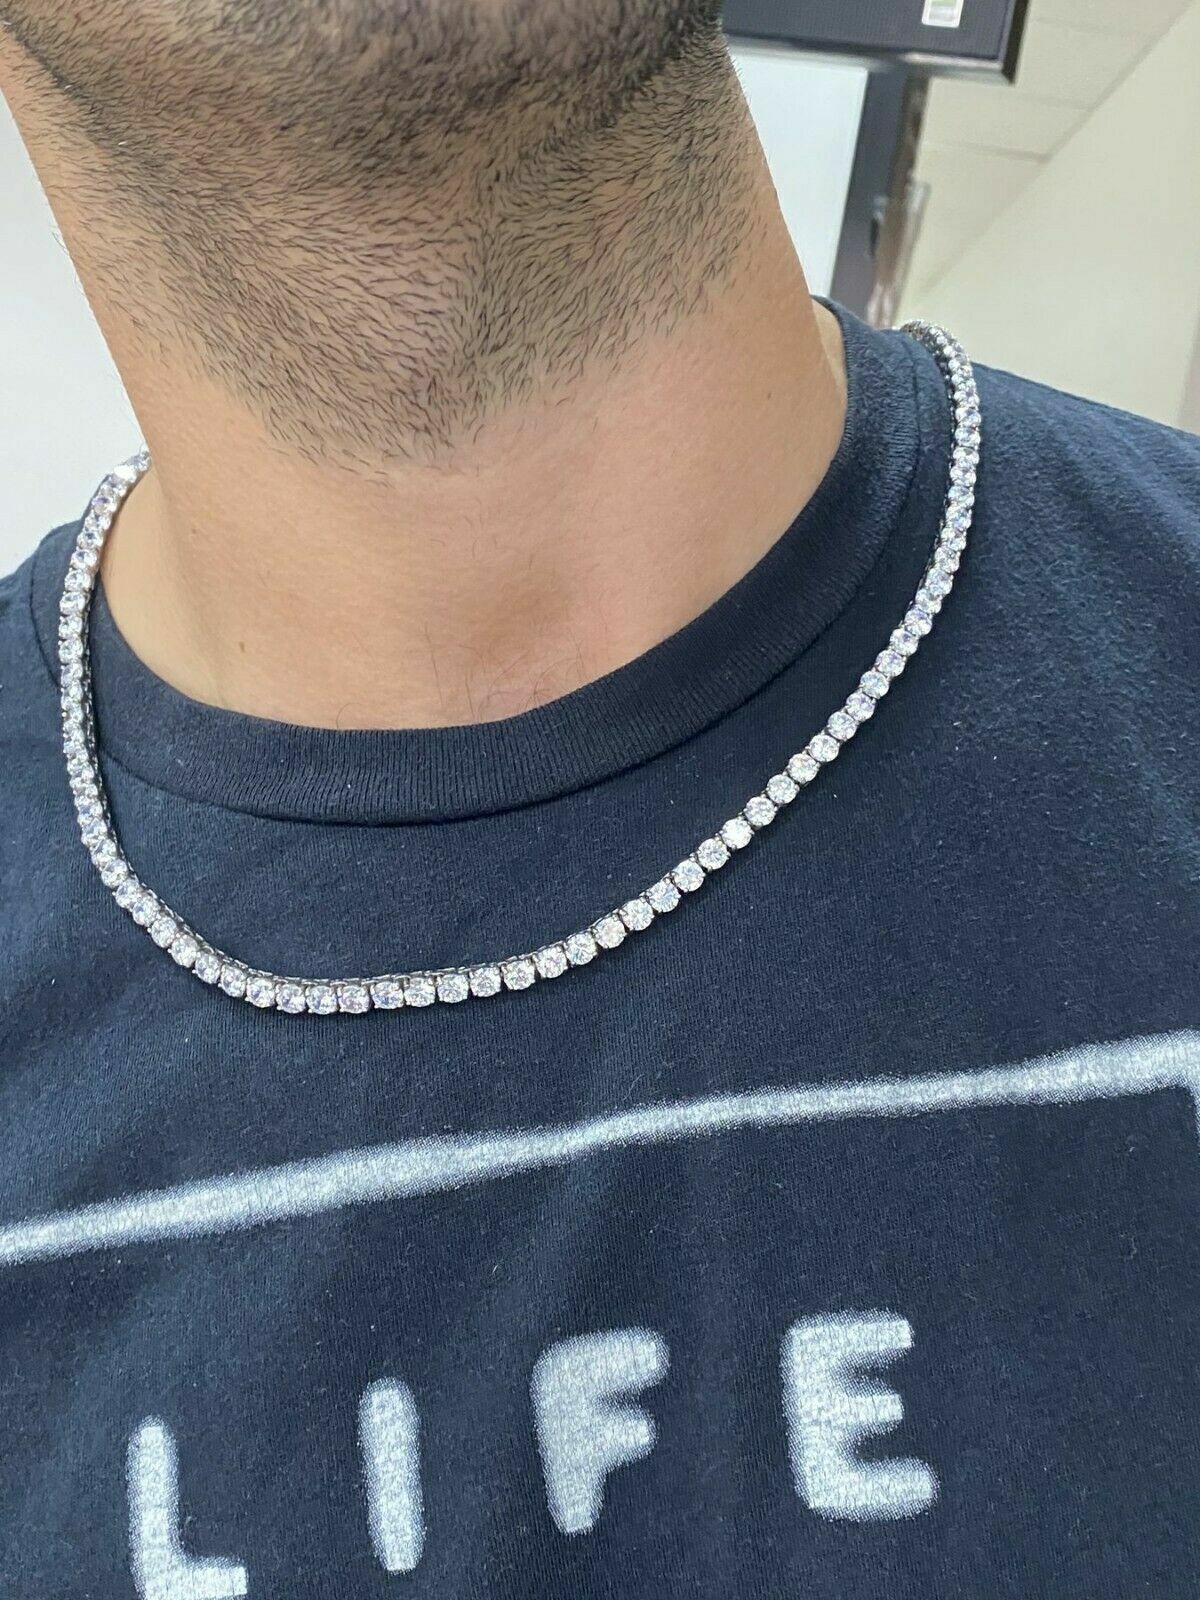 24-160 Ct Round Cut Moissanite Diamond Chain Necklace 14k White Gold Finish 20\